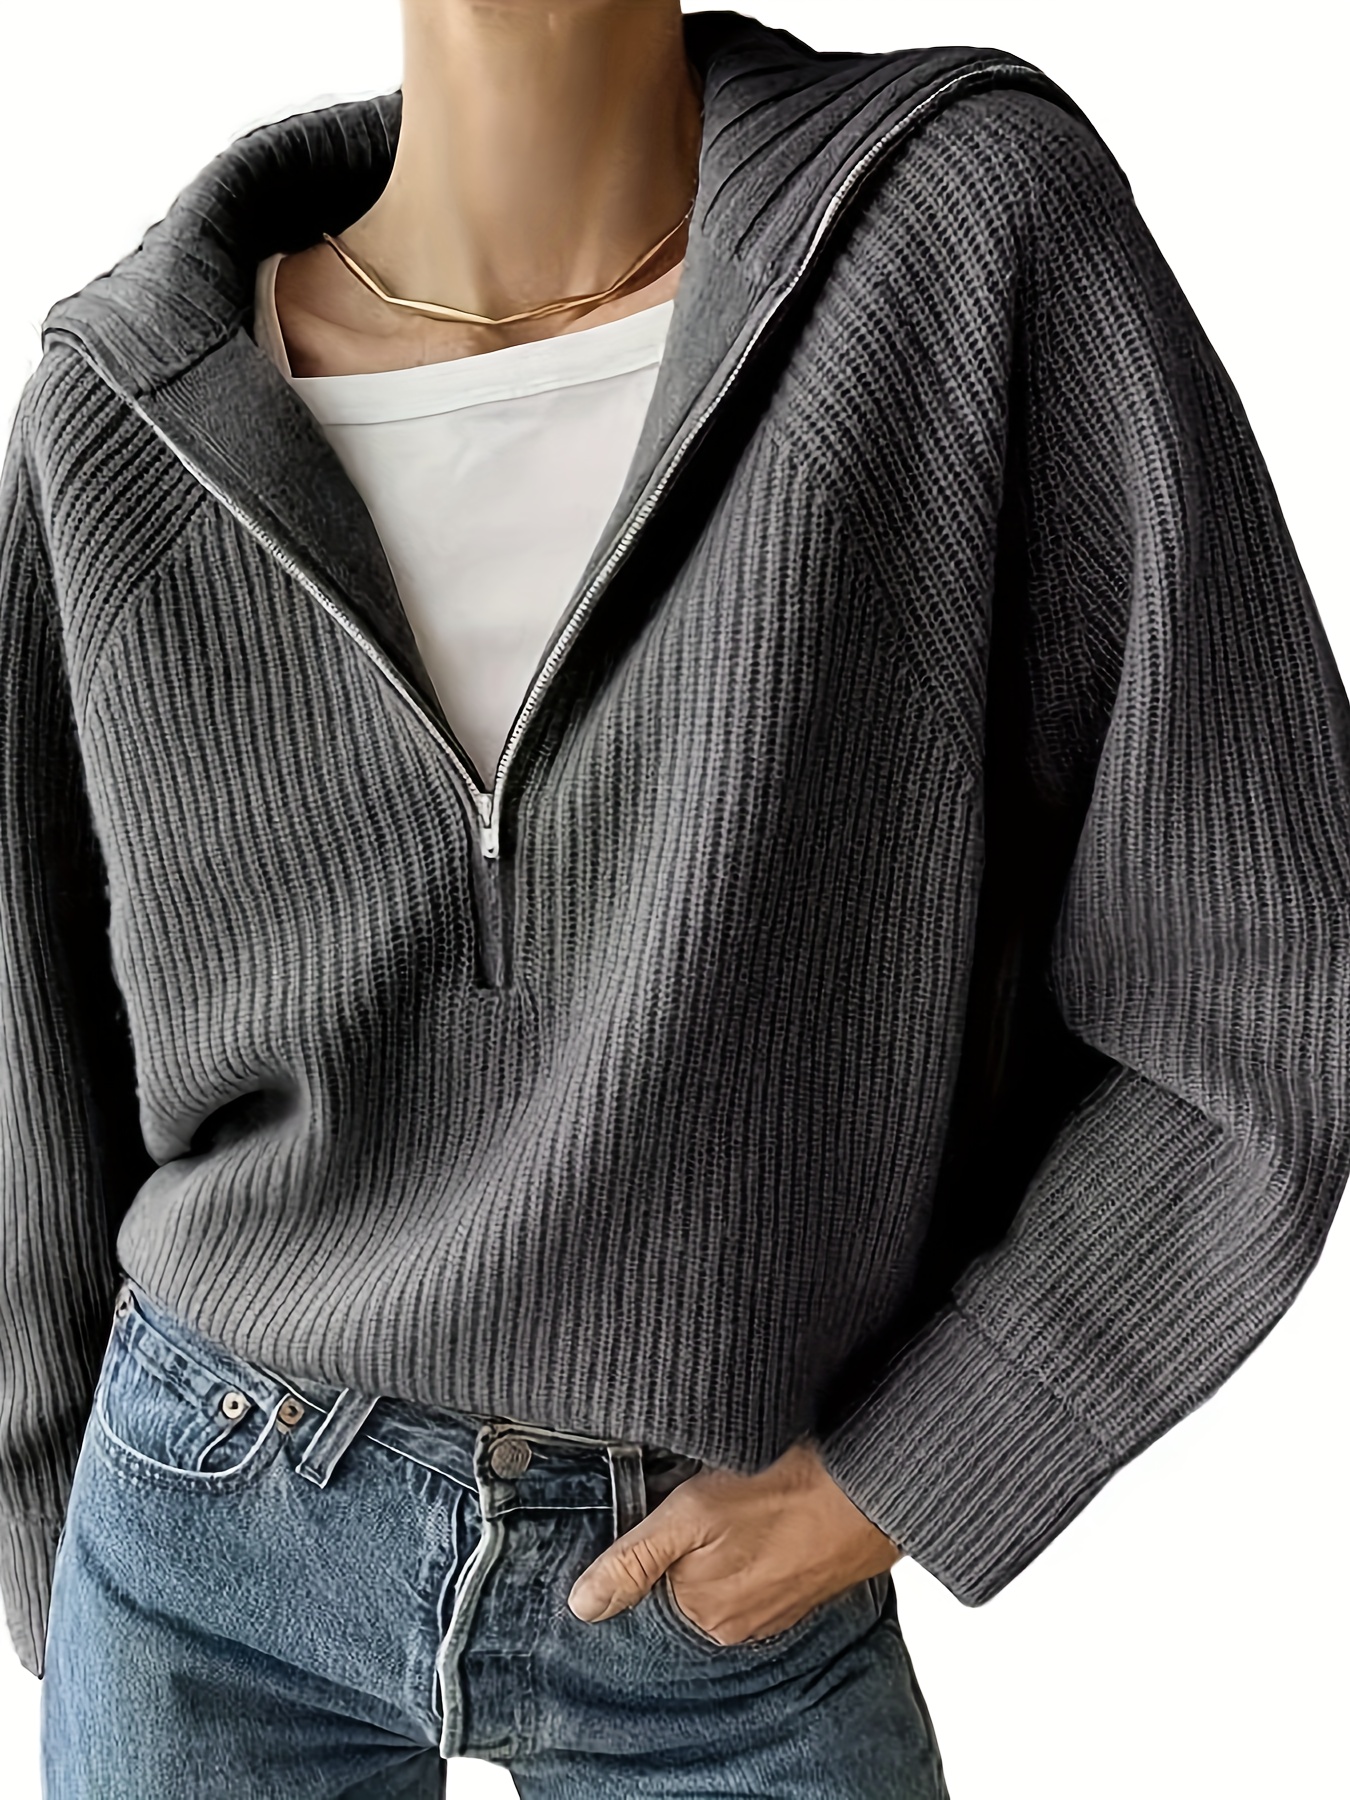 Spyder Women's Alyx Half-Zip Sweater  Womens outdoor clothing, Fashion  clothes women, Half zip sweaters